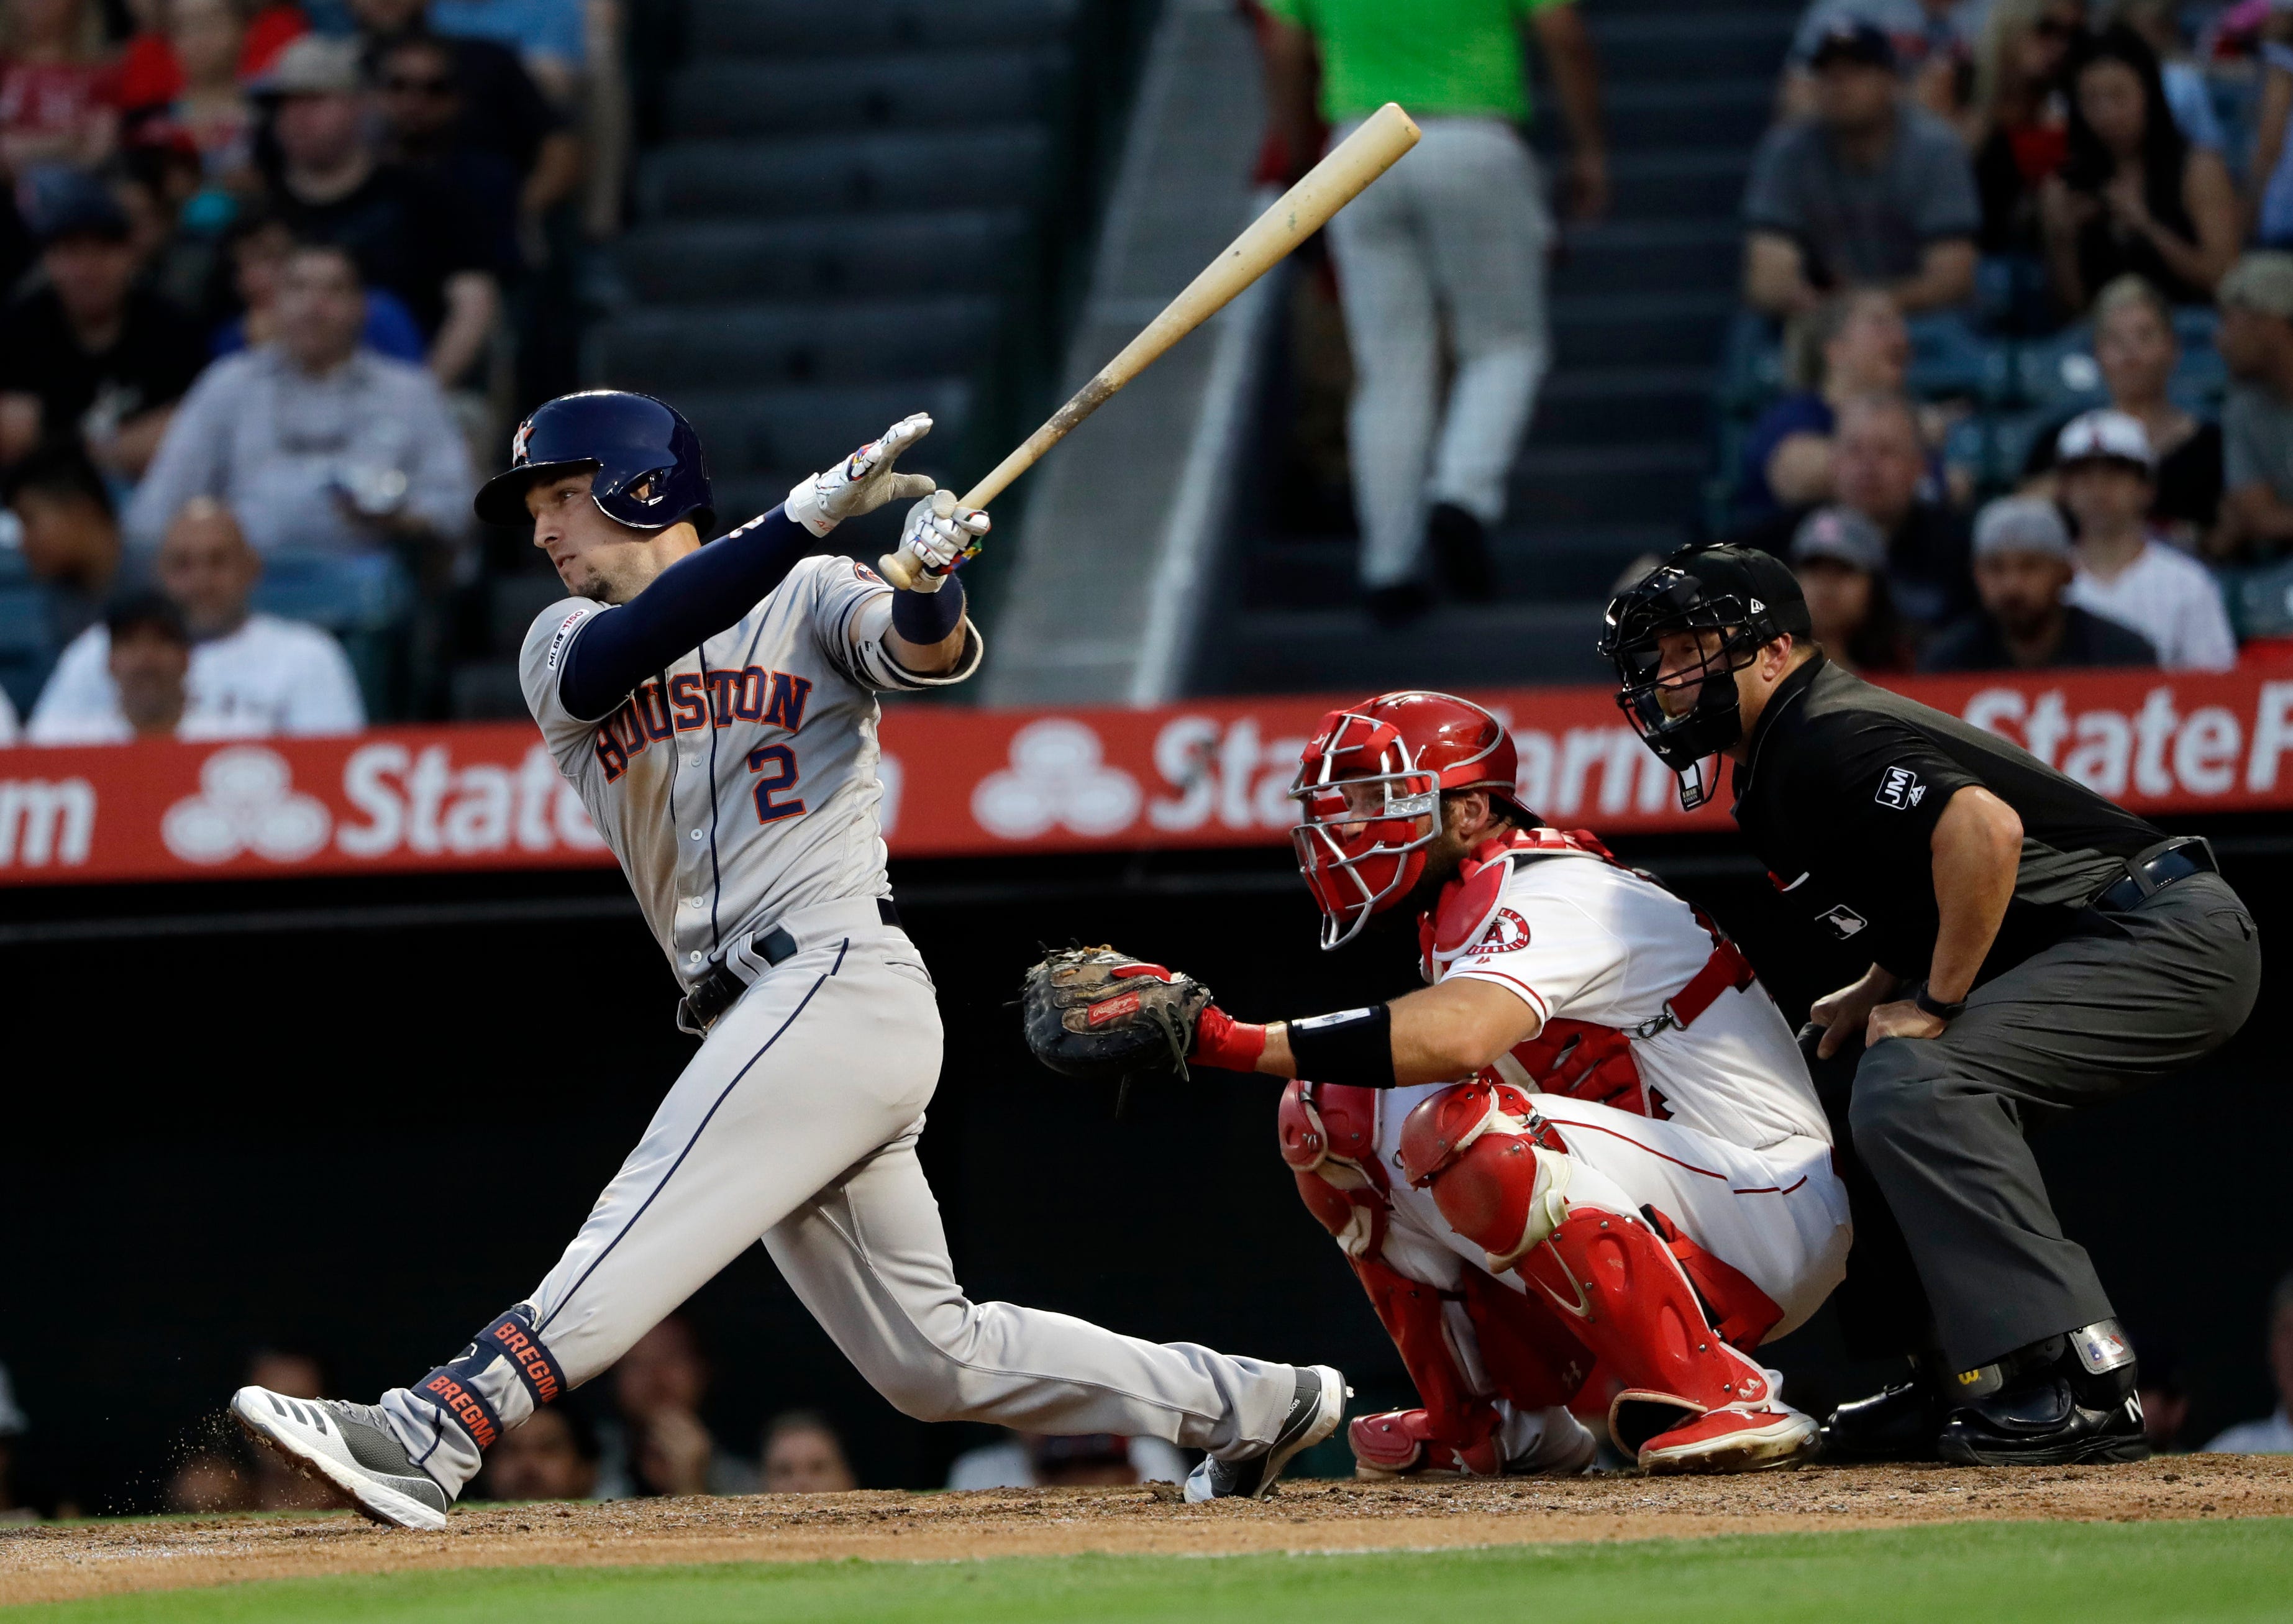 Pujols' 3 hits, 3 RBIs power streaking Halos past Astros 9-6